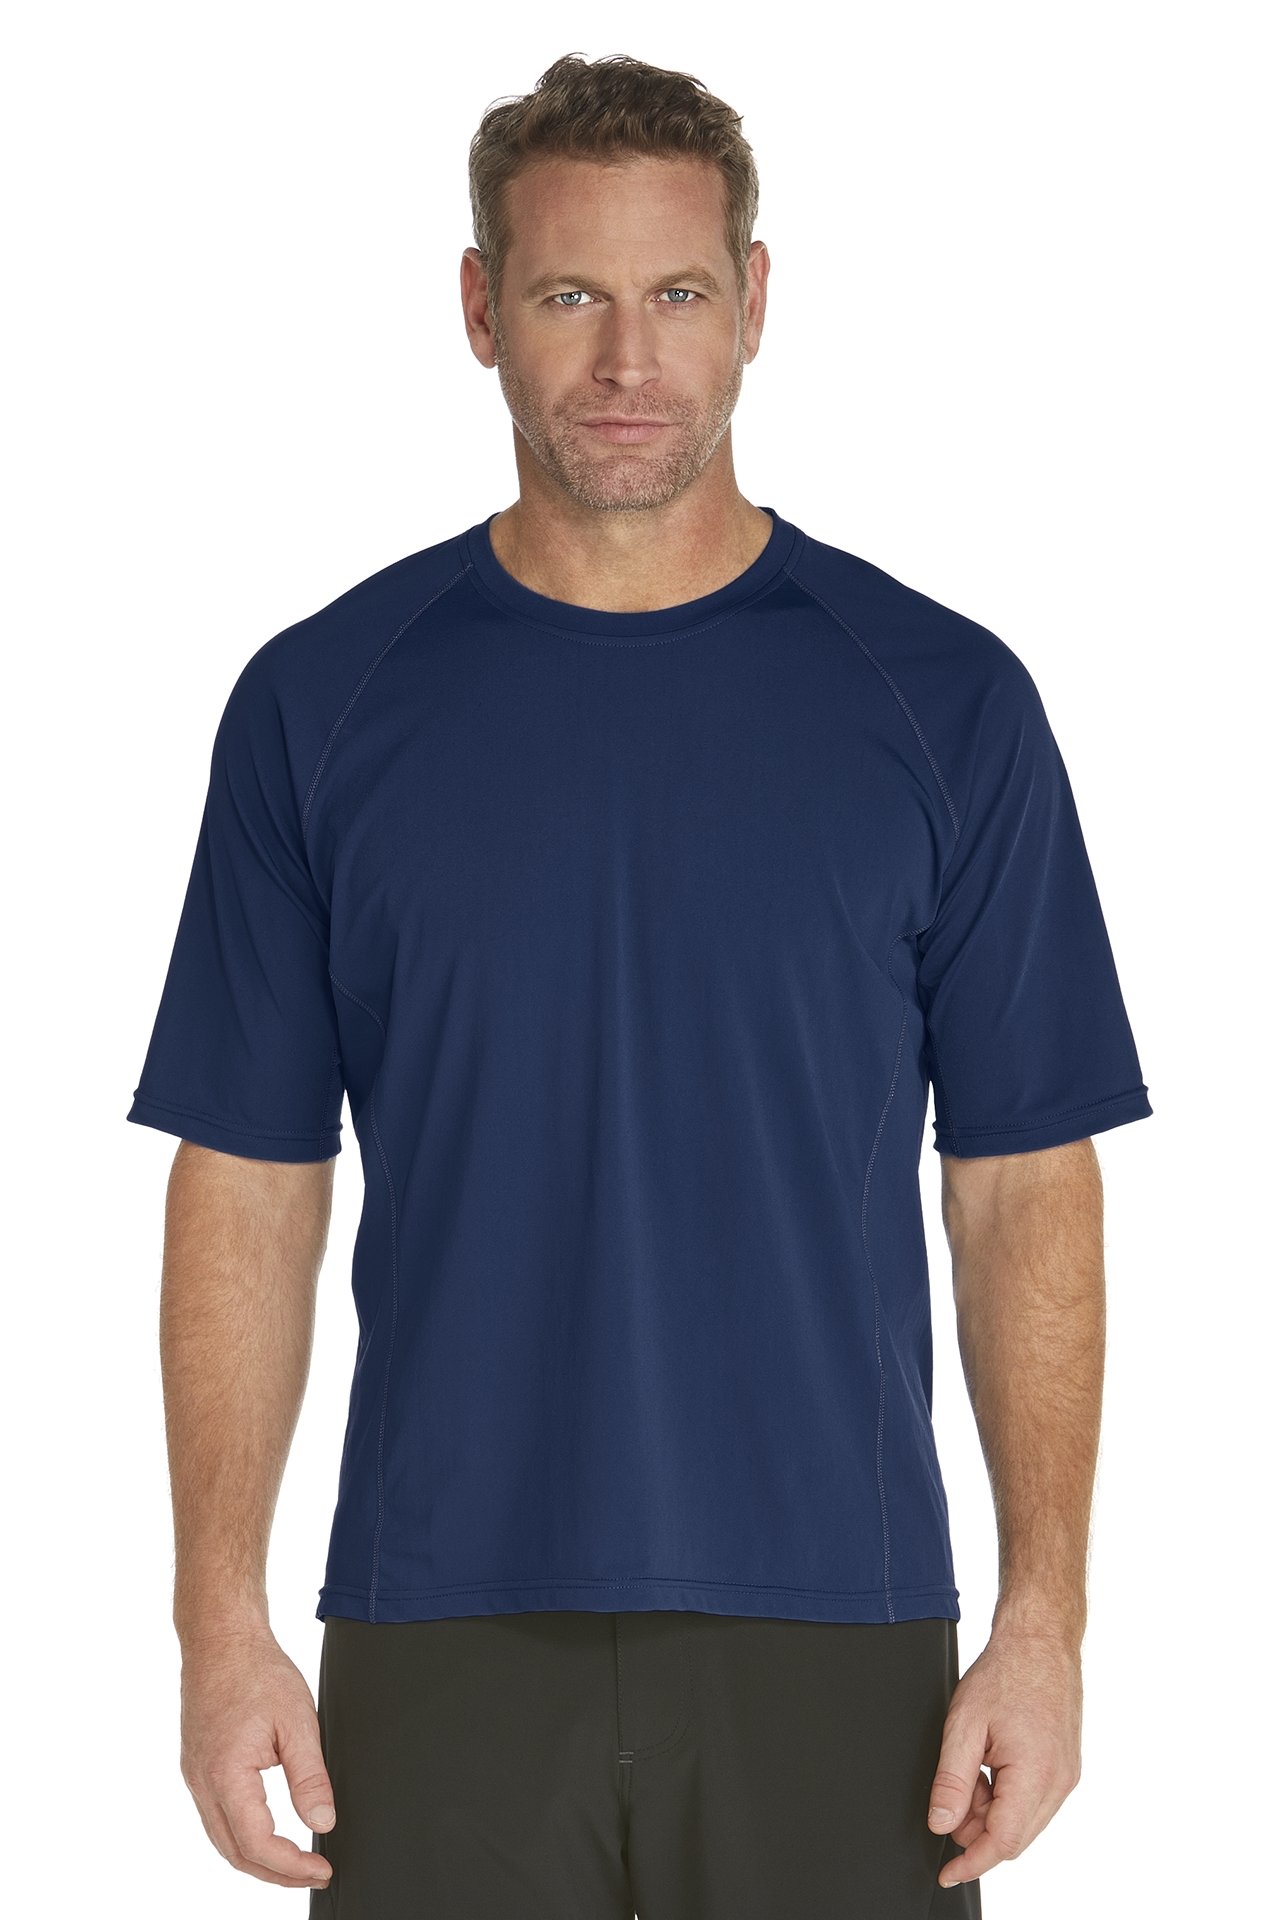 Coolibar - Men's Short-Sleeve Swim Shirt - navy